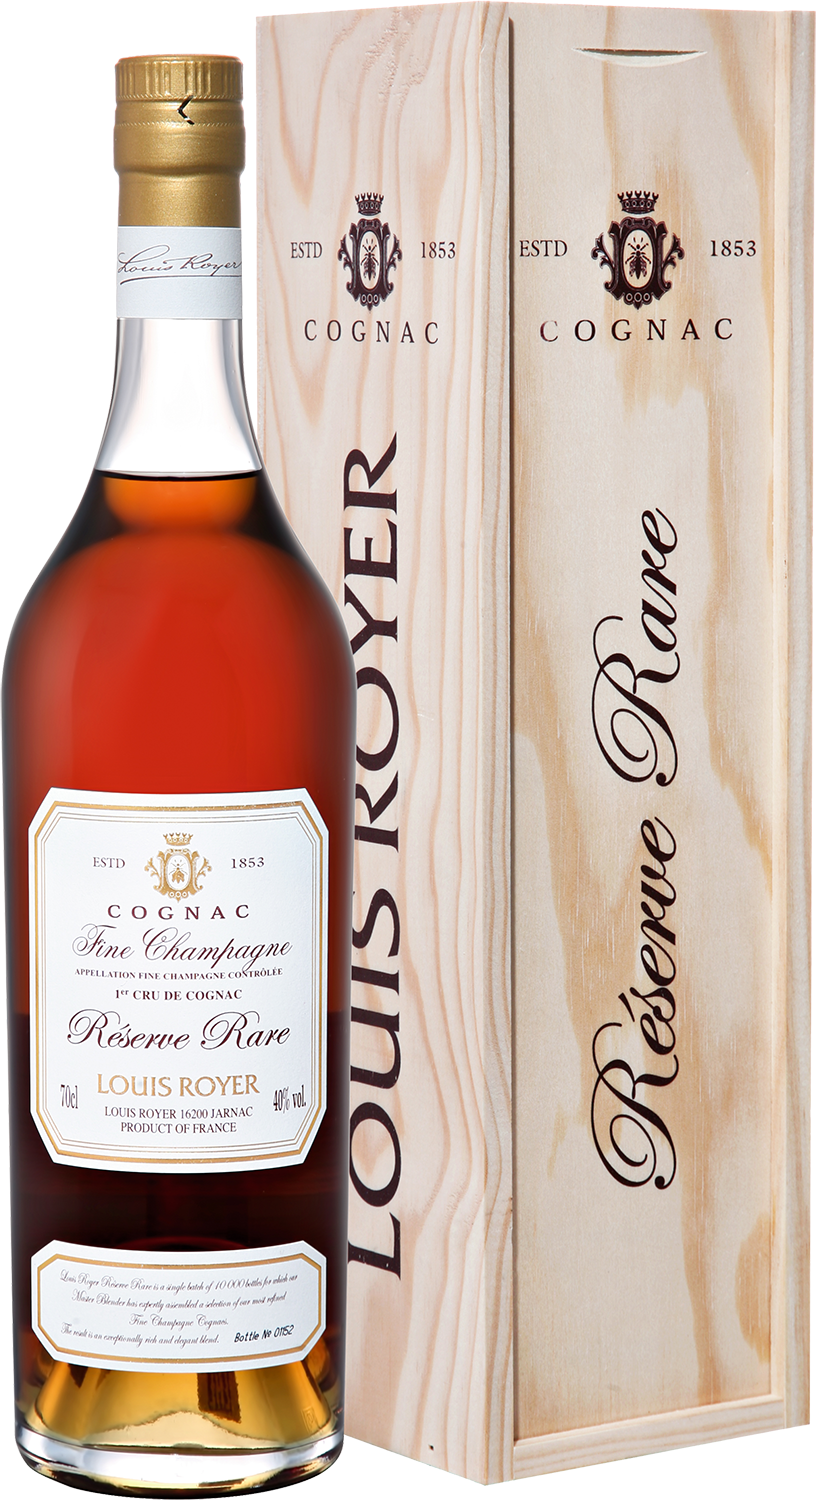 louis royer cognac xo gift box Cognac Louis Royer Fine Champagne Reserve Rare (gift box)